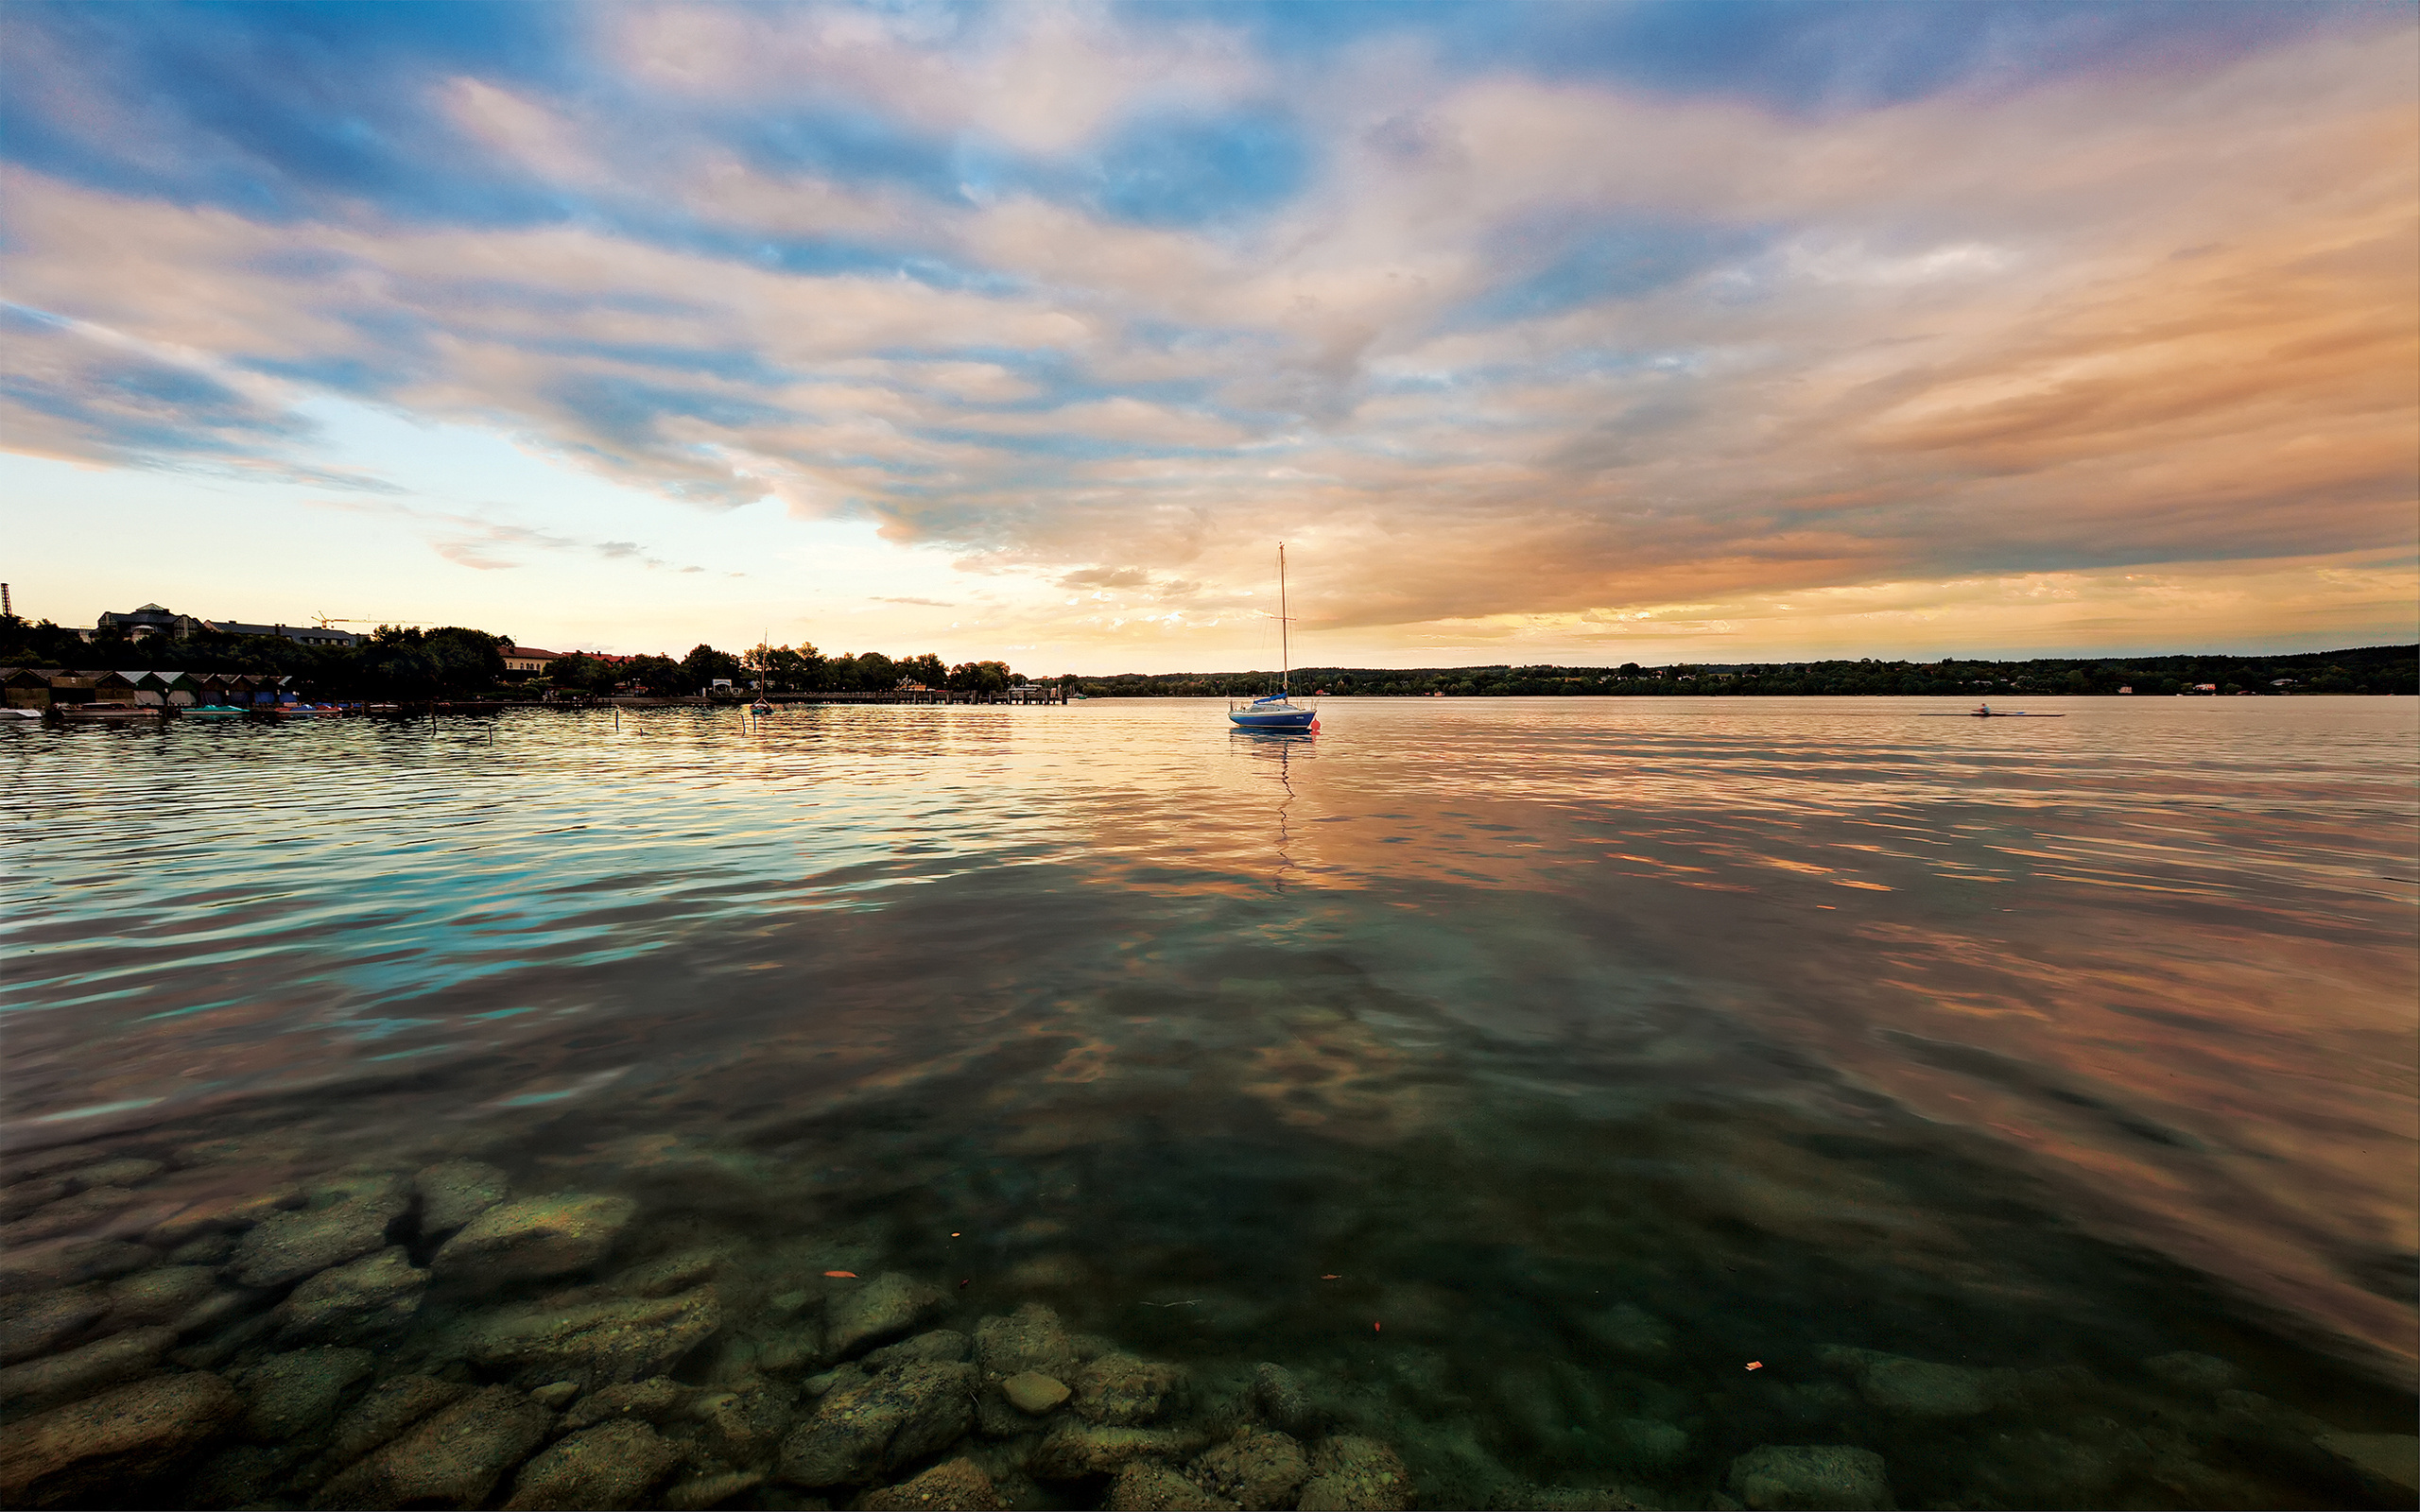 Serene lake reflecting stunning landscape in this desktop wallpaper.